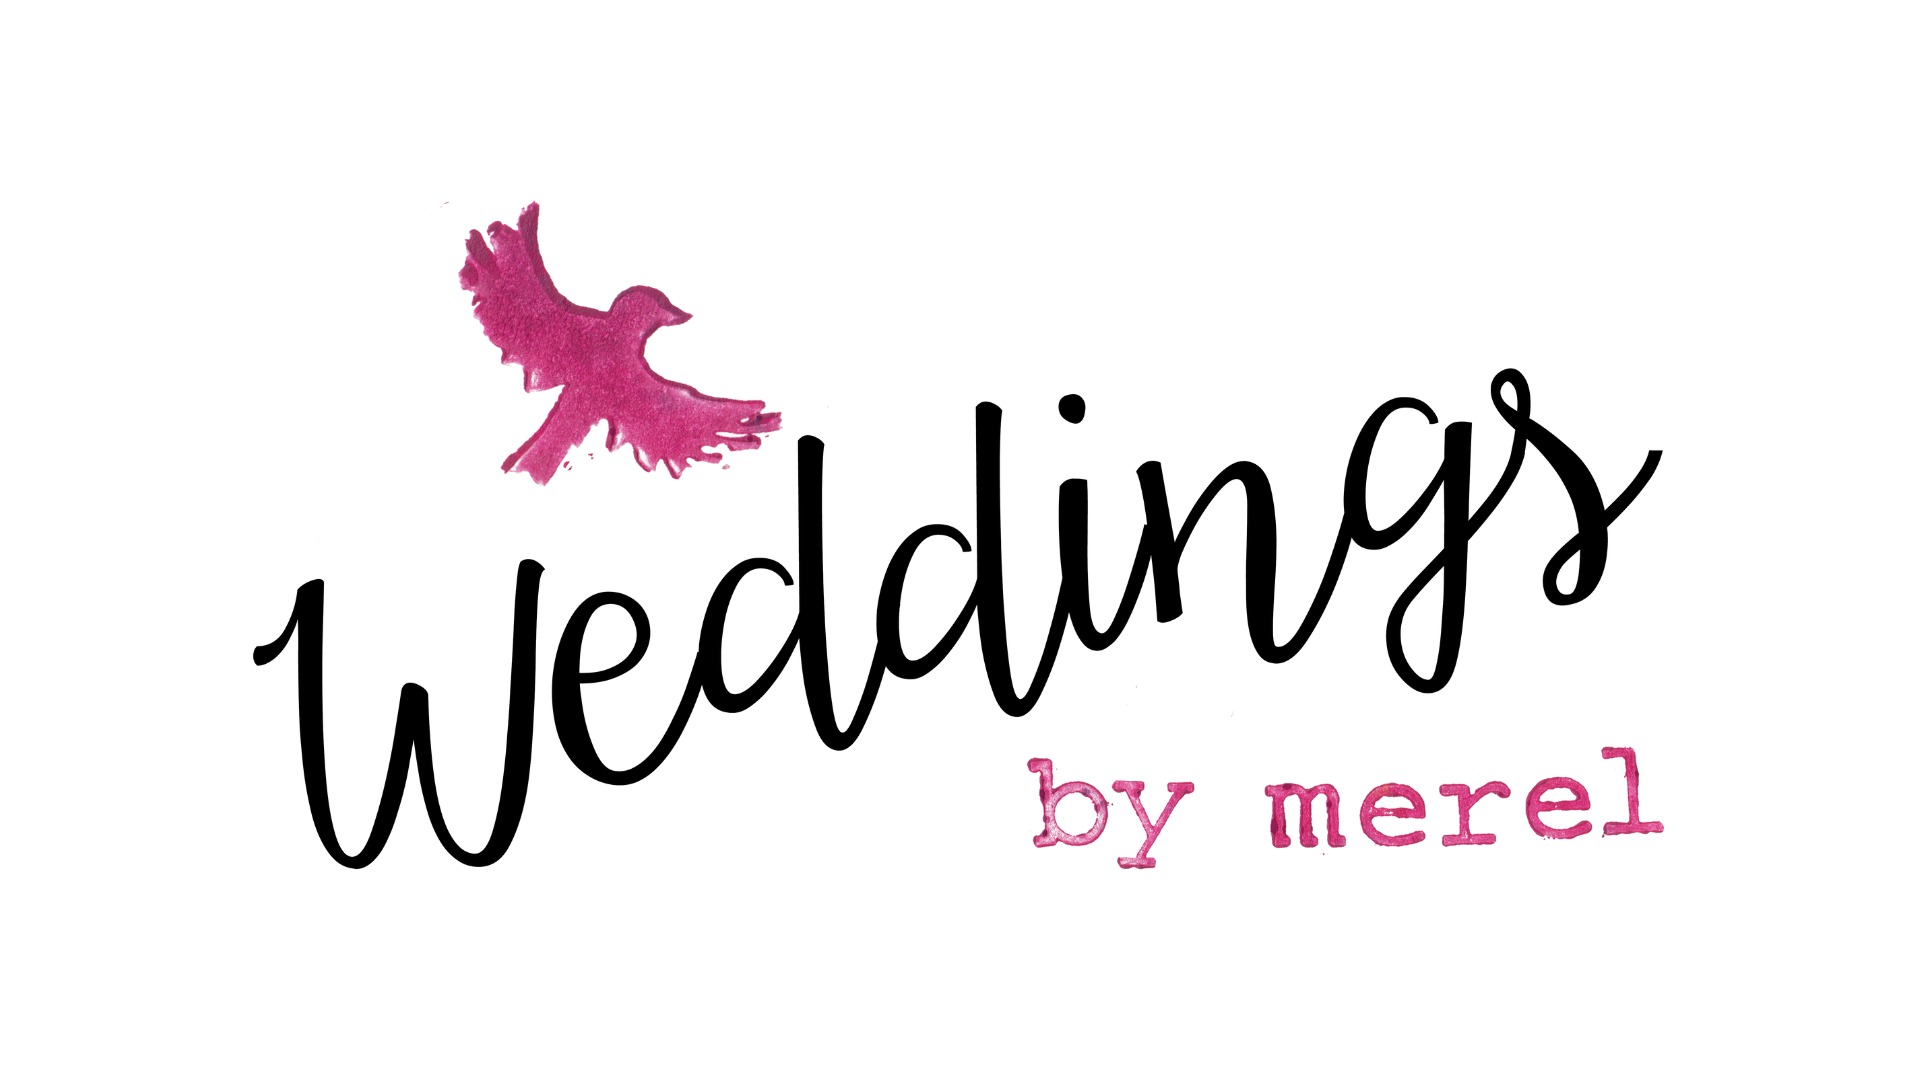 weddings by merel logo